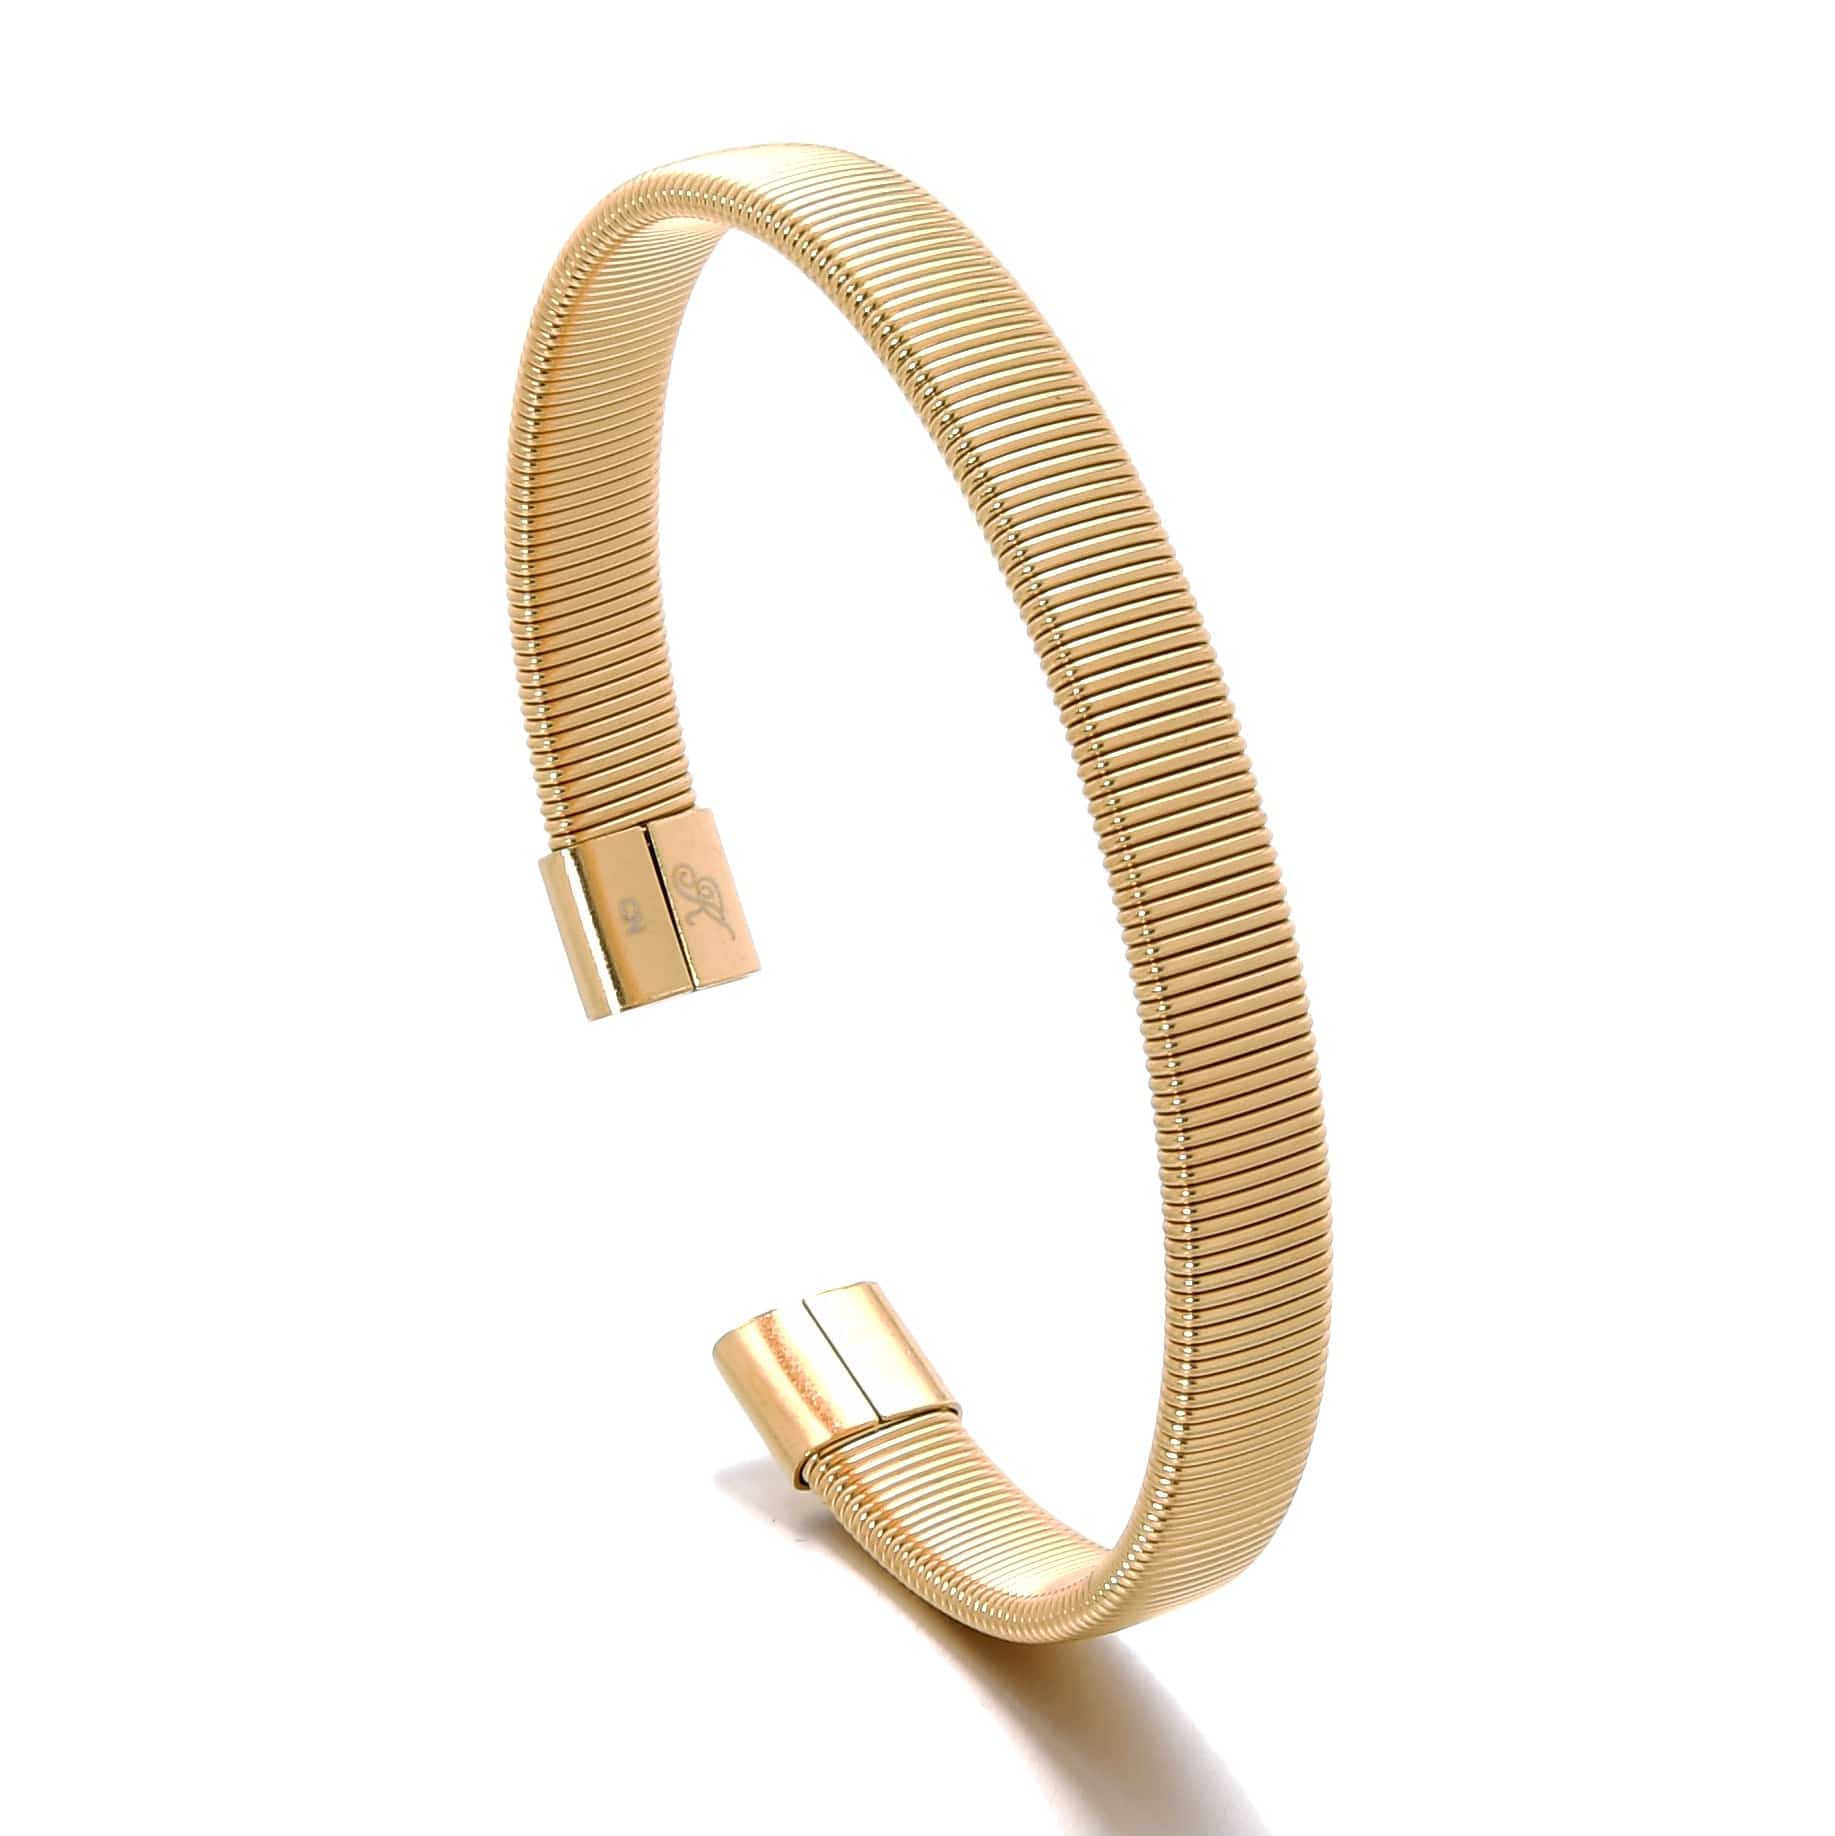 Kalifano Steel Hearts Jewelry Gold Flex Cable Braided Steel Hearts Bracelet SHB144-G